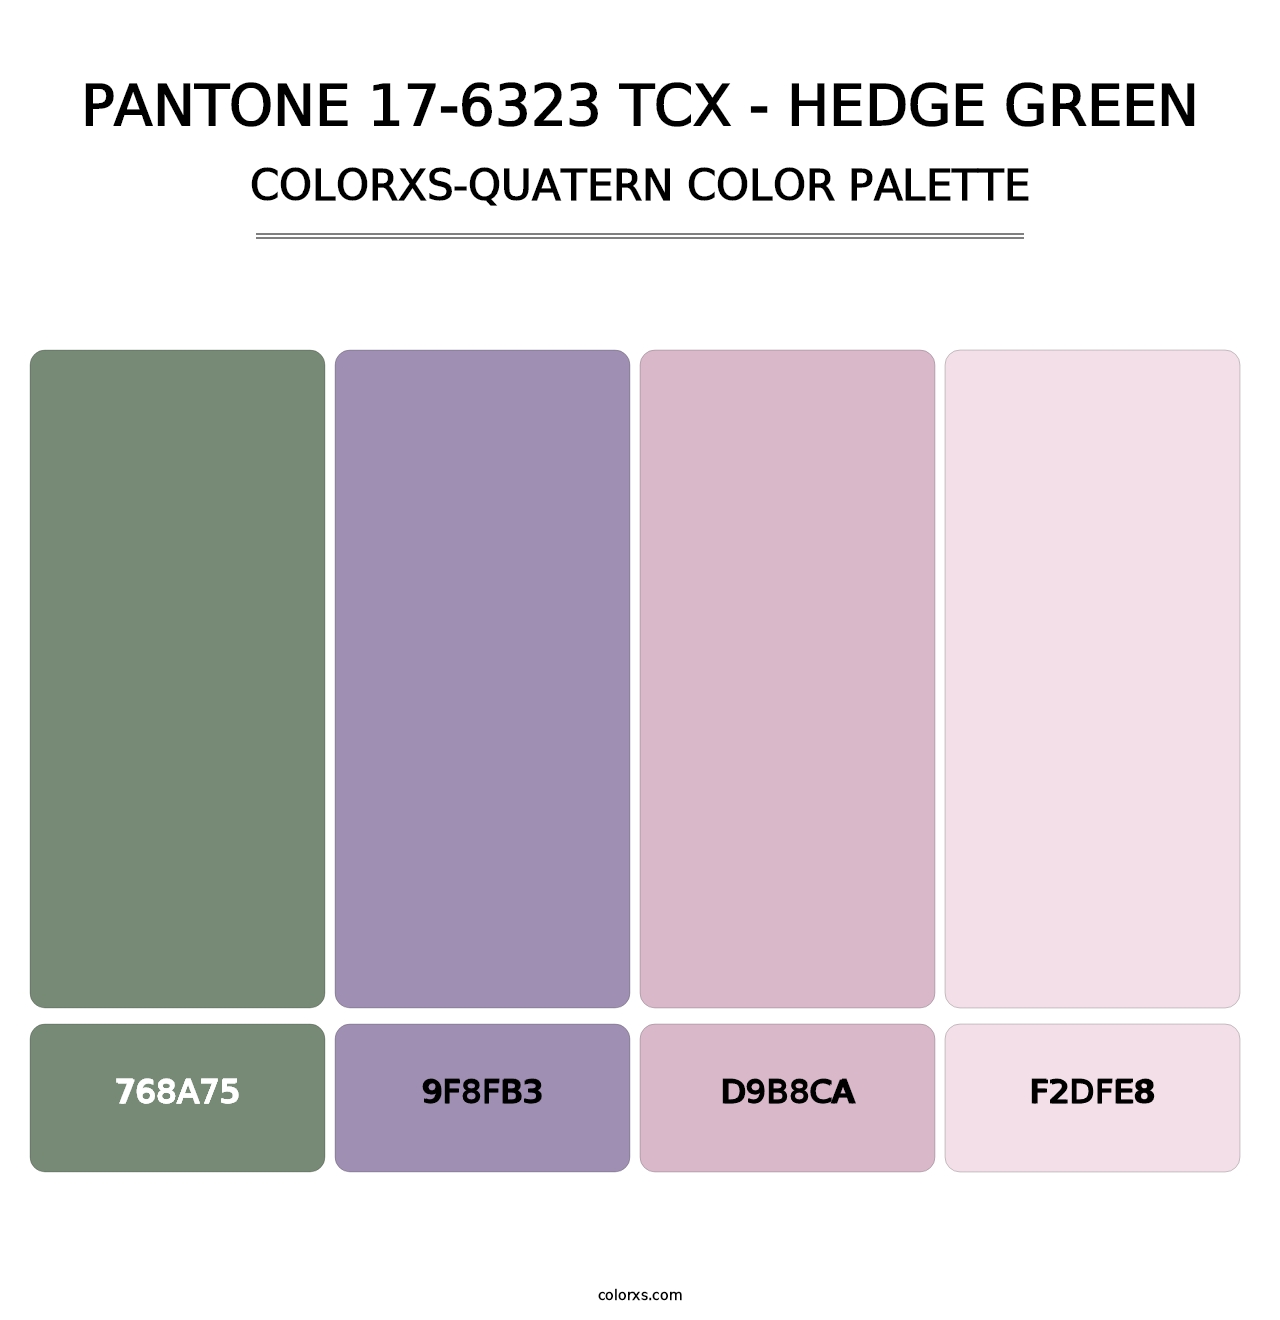 PANTONE 17-6323 TCX - Hedge Green - Colorxs Quatern Palette